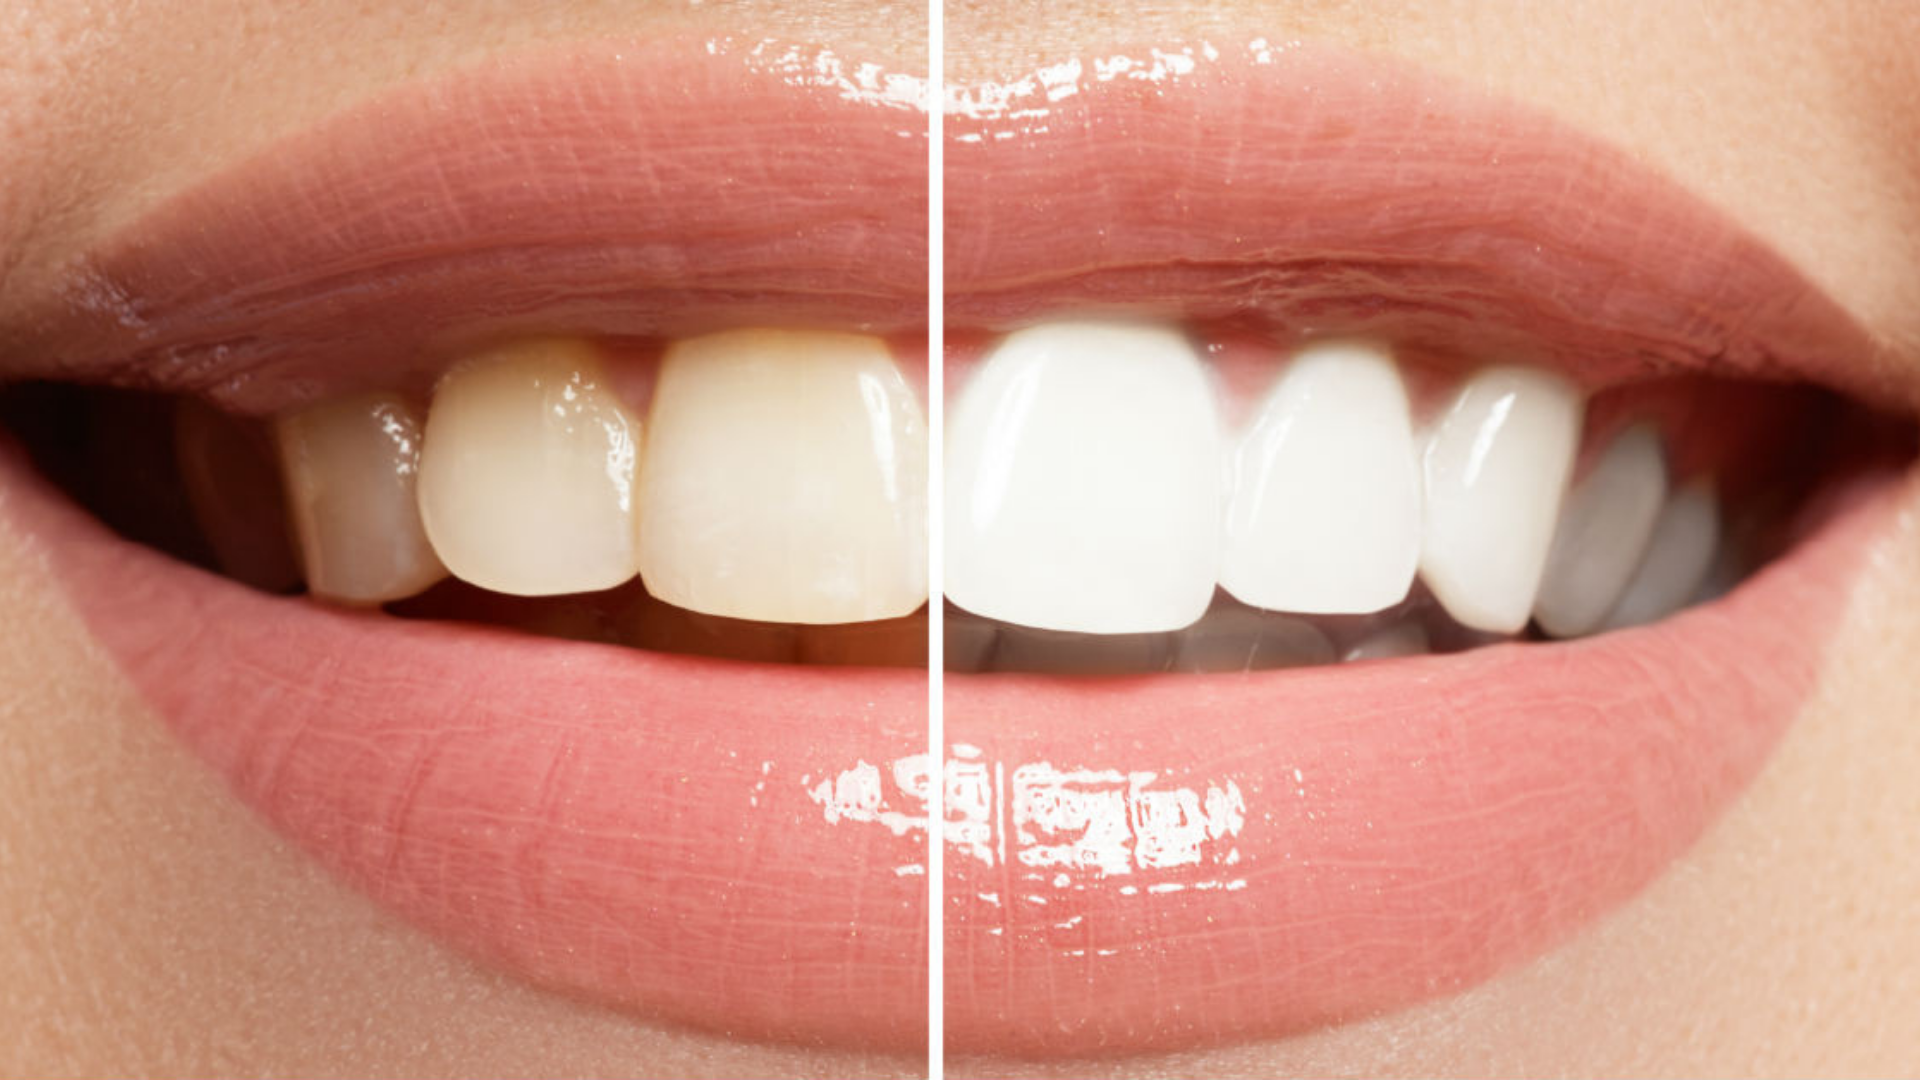 Is teeth whitening safe? - North Sydney Dental Practice